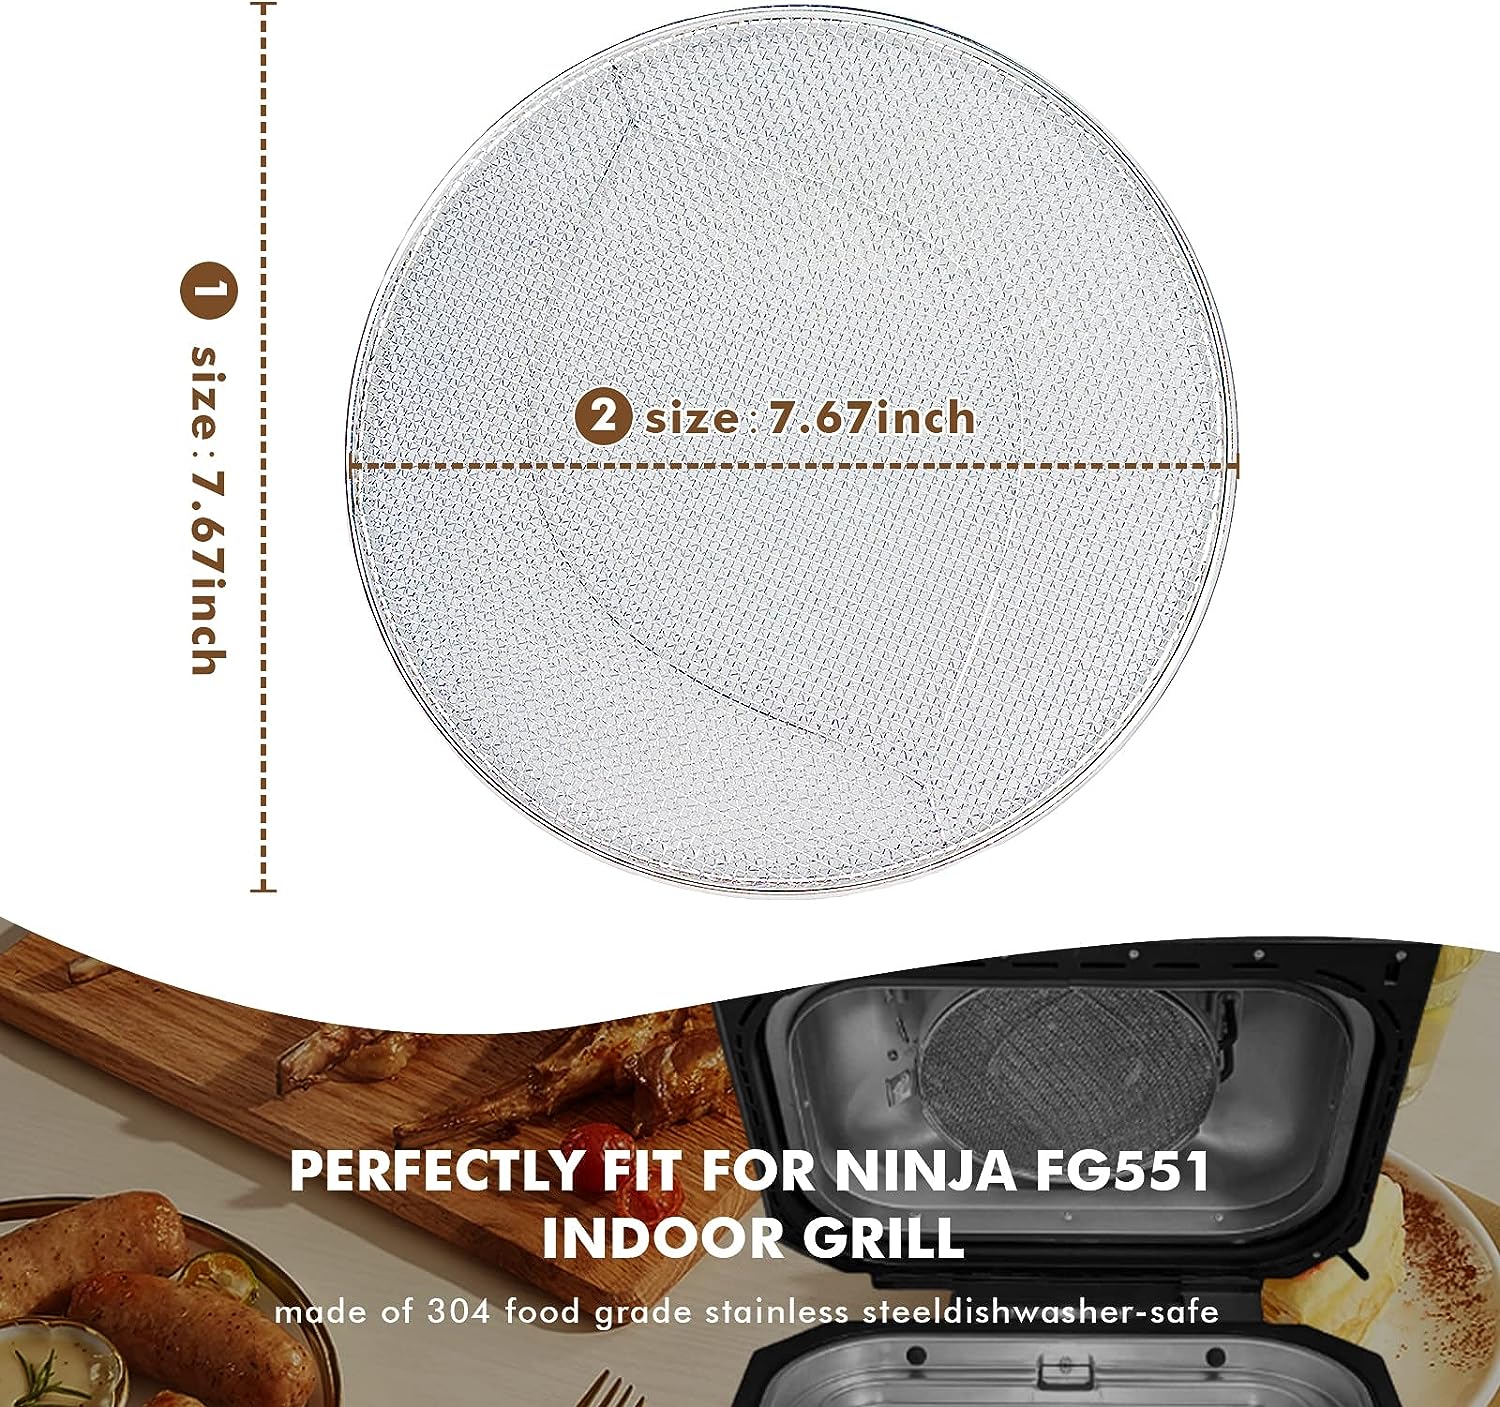 Ninja FG551 Foodi Smart XL Air Fryer 6-in-1 Indoor Grill